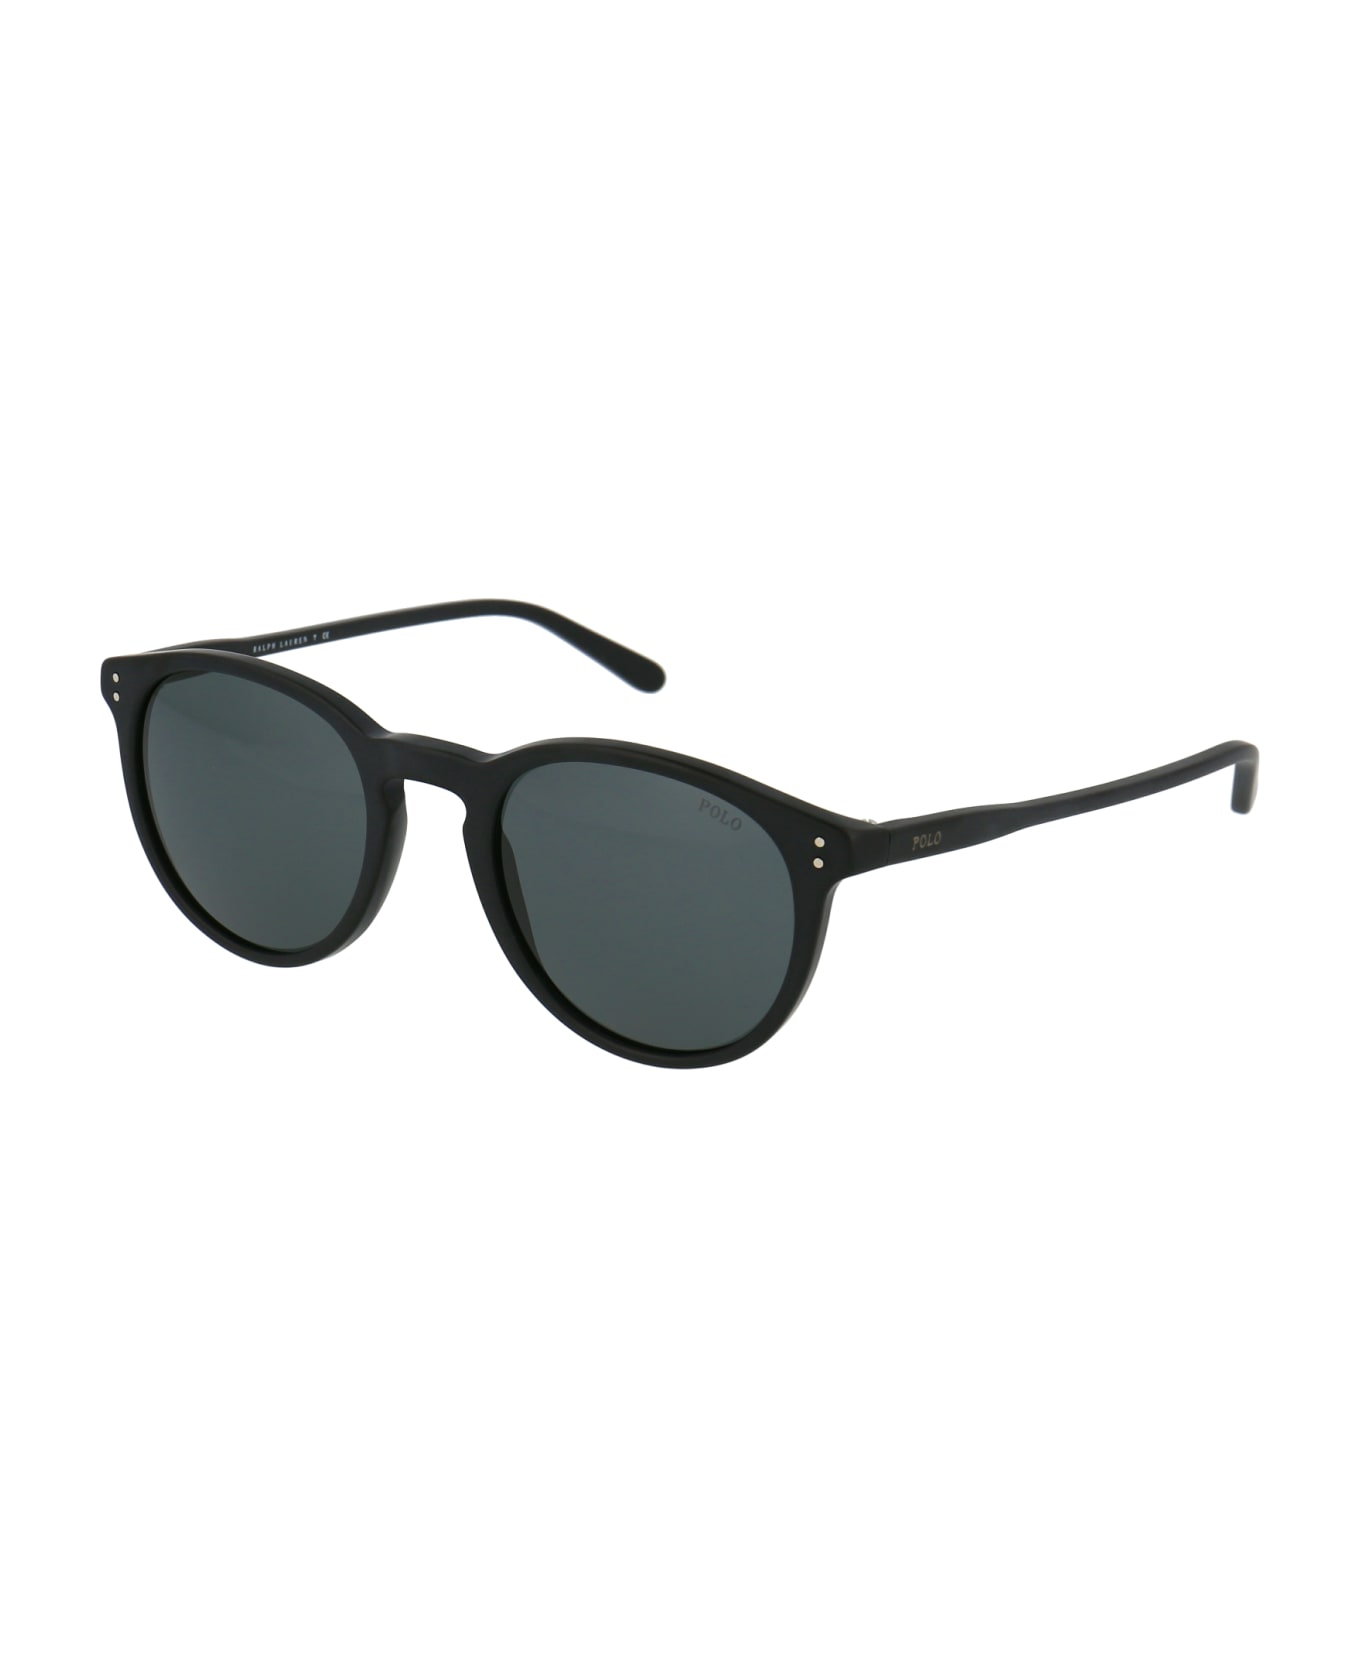 Polo Ralph Lauren 0ph4110 Sunglasses - 528487 MATTE BLACK サングラス